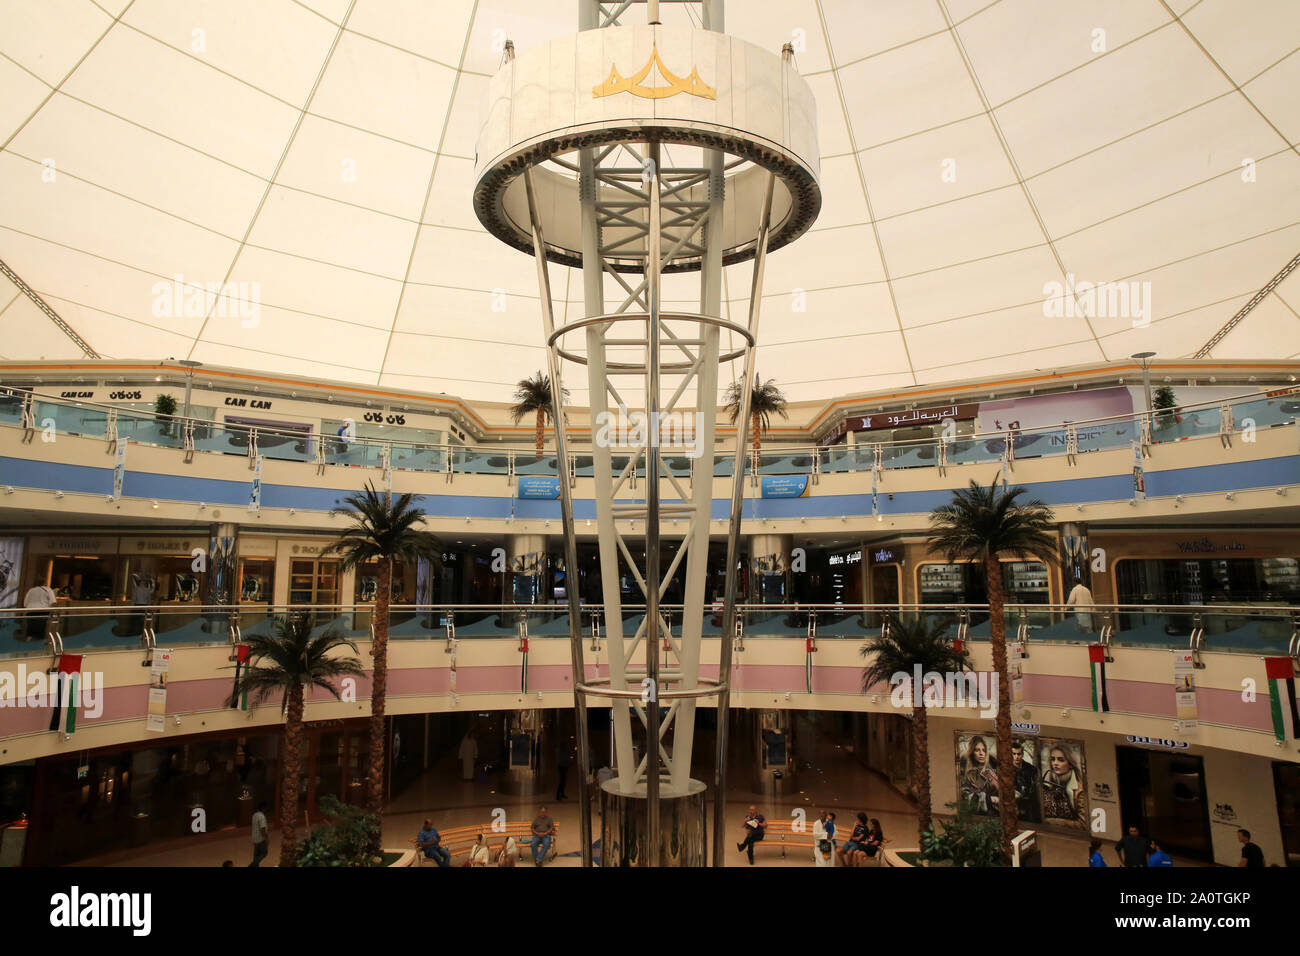 Internal steam fountain in main atrium. Interior of Marina Mall Shopping Centre. 2001. Abou Dhabi. Emirats Arabes Unis. Stock Photo